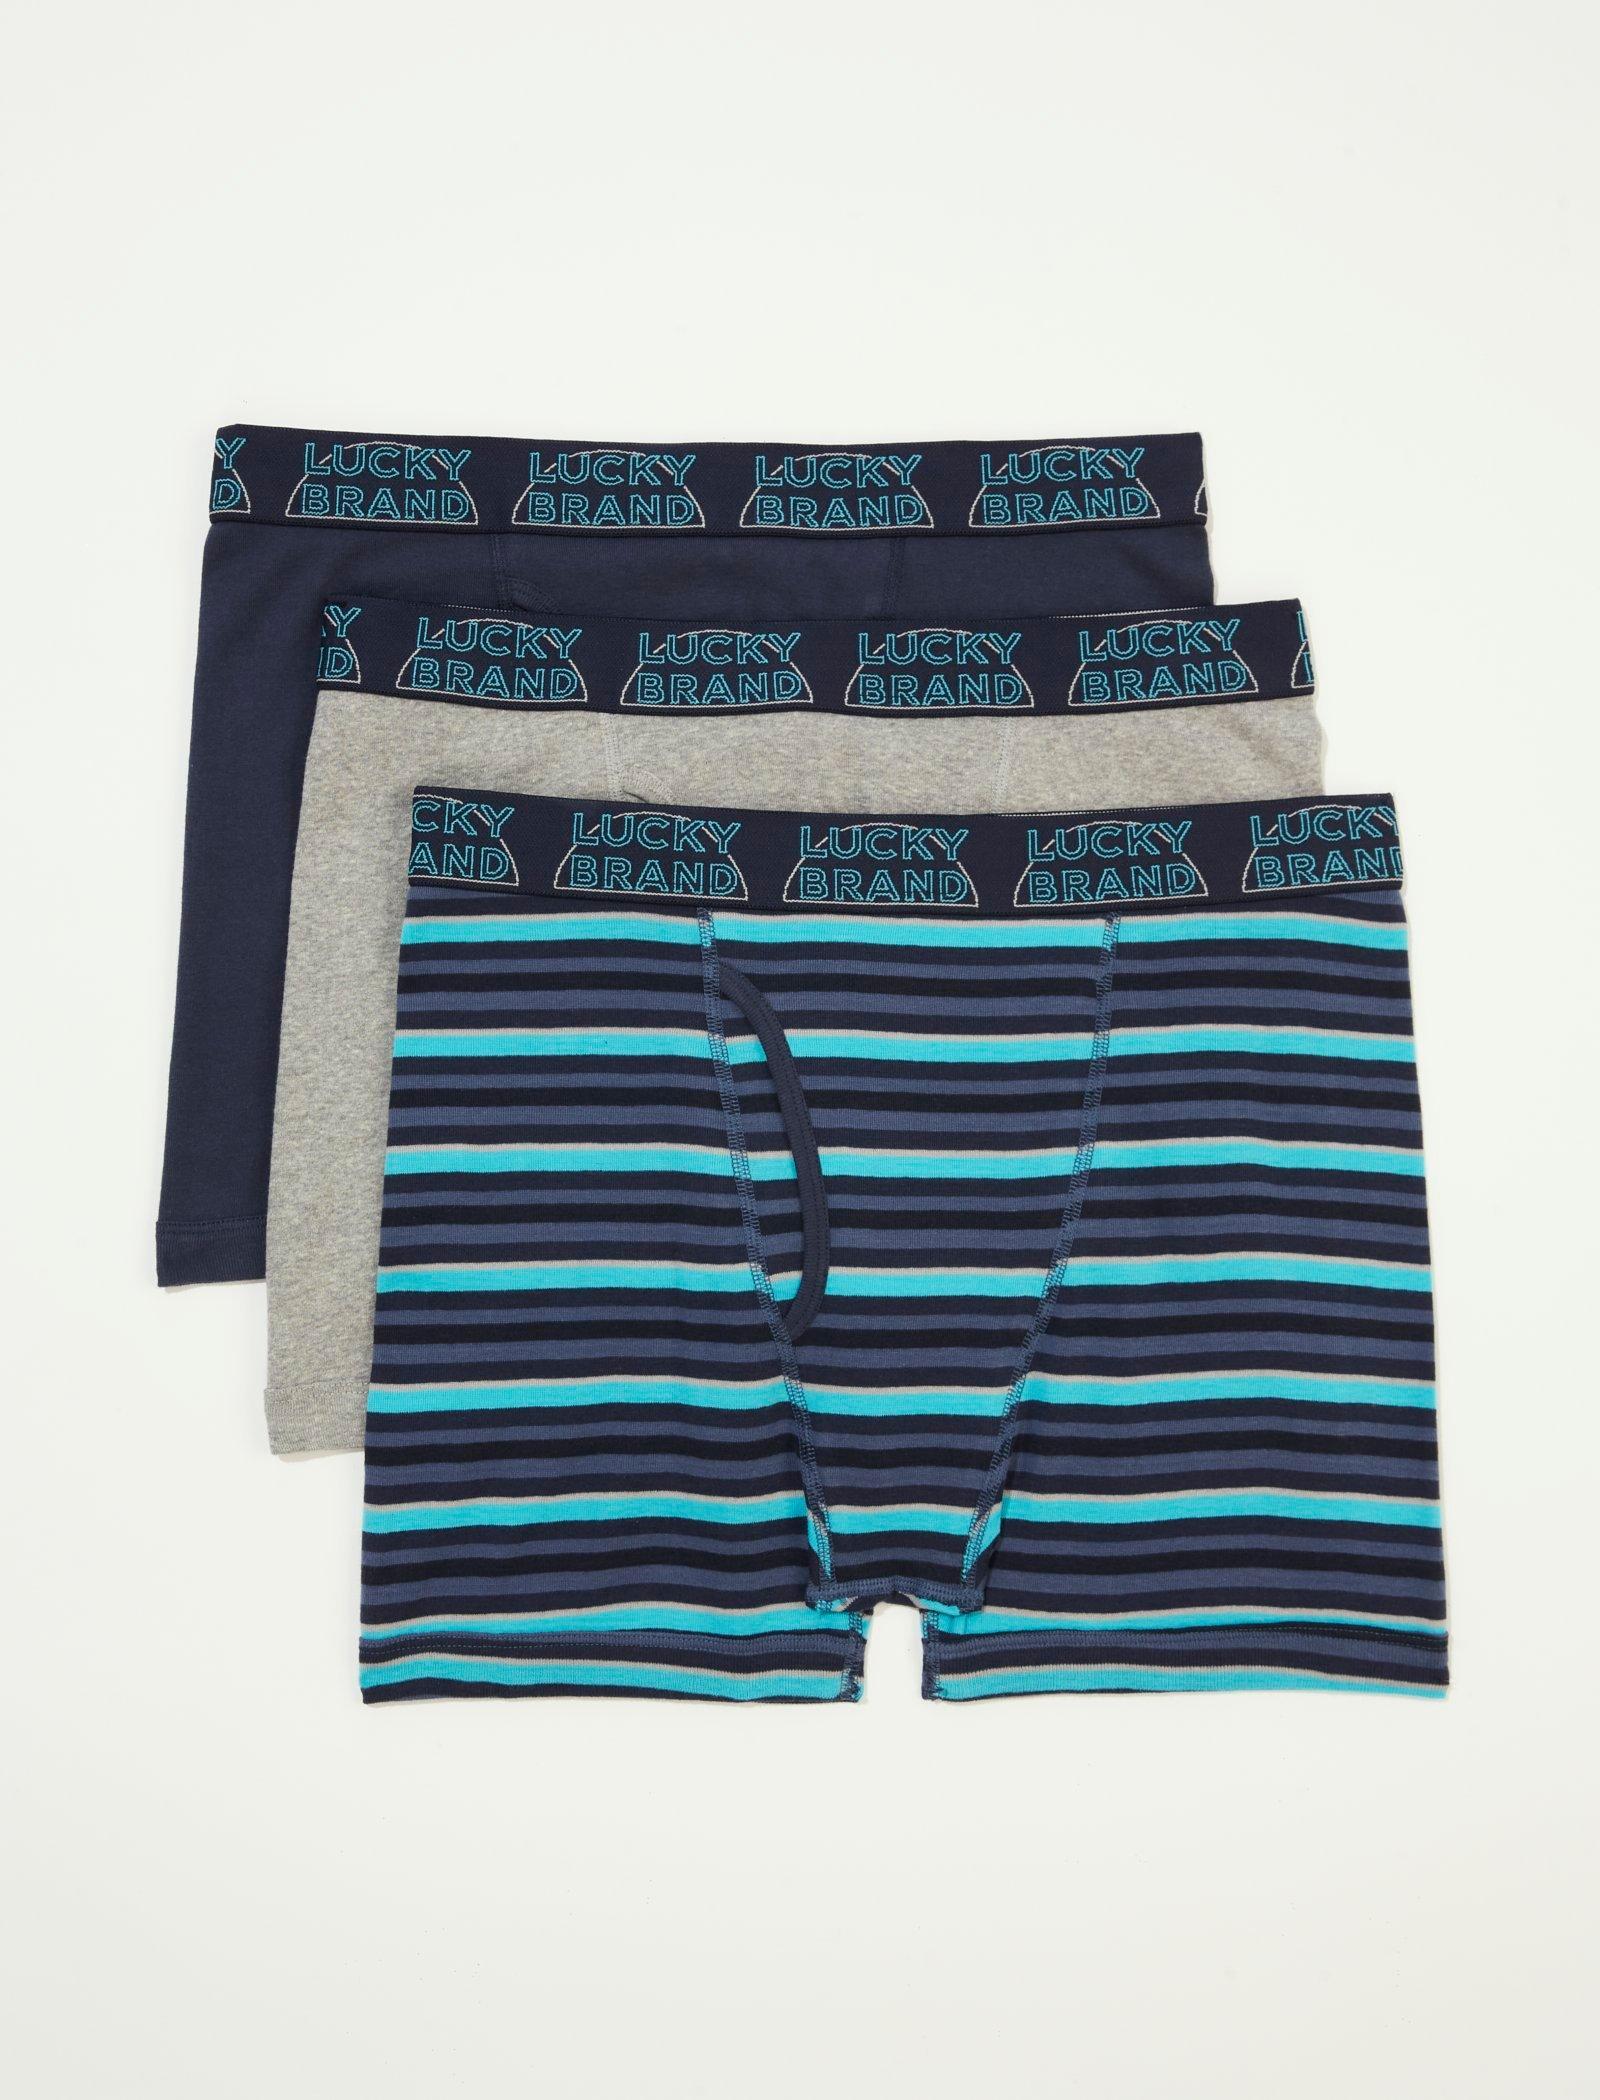 Lucky Brand Men's Underwear - Classic Boxer Briefs 3 Pack